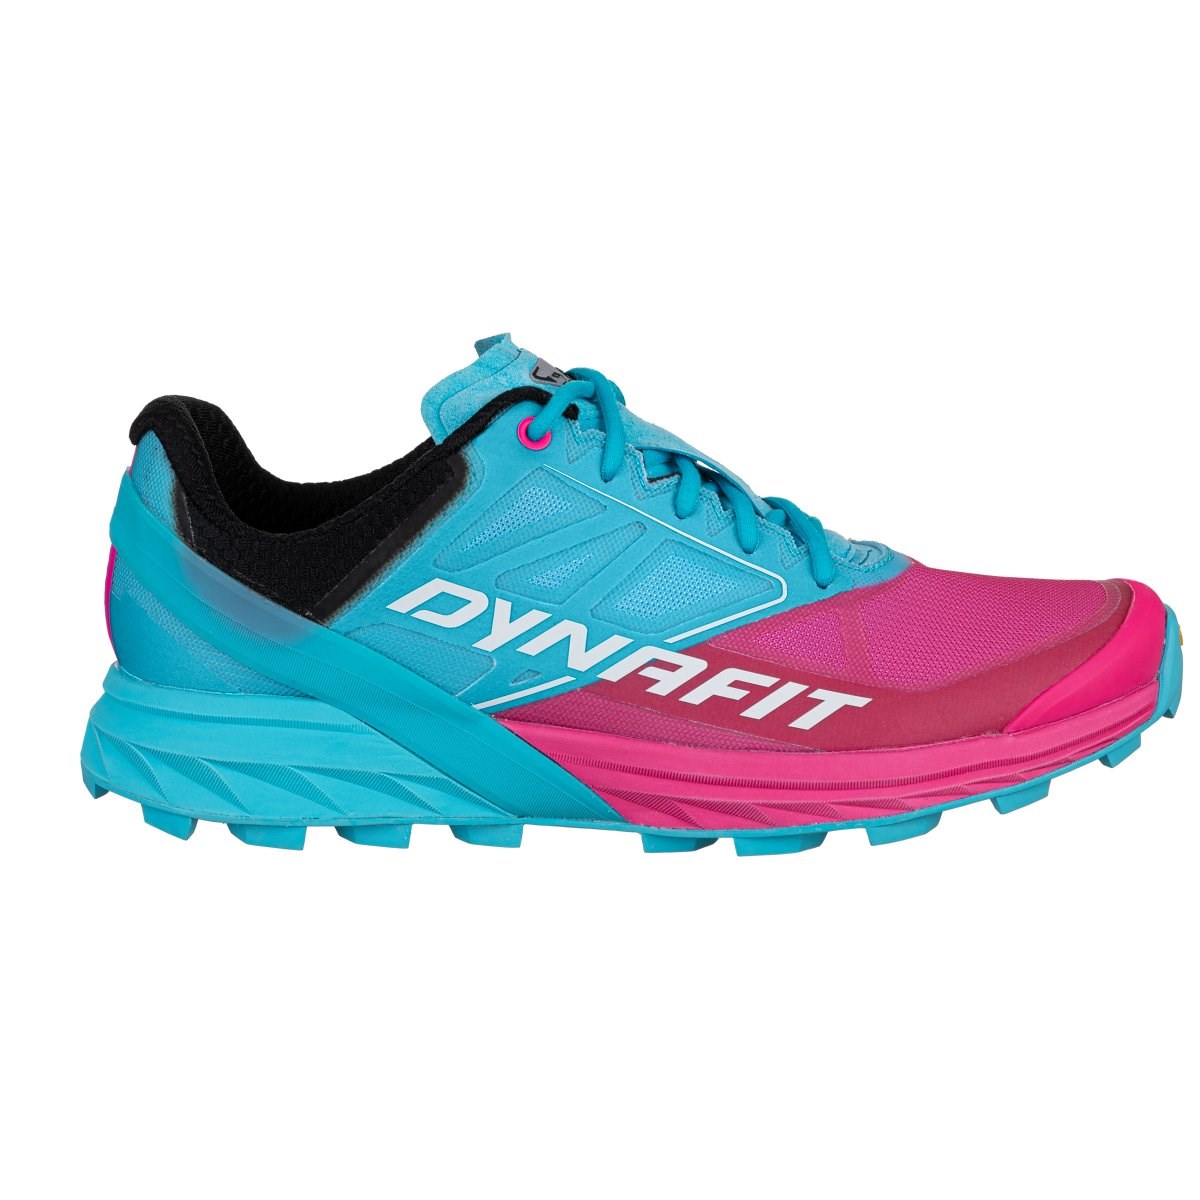 Boty Dynafit Alpine W turquoise/pink glo Dynafit 10020216 L-11